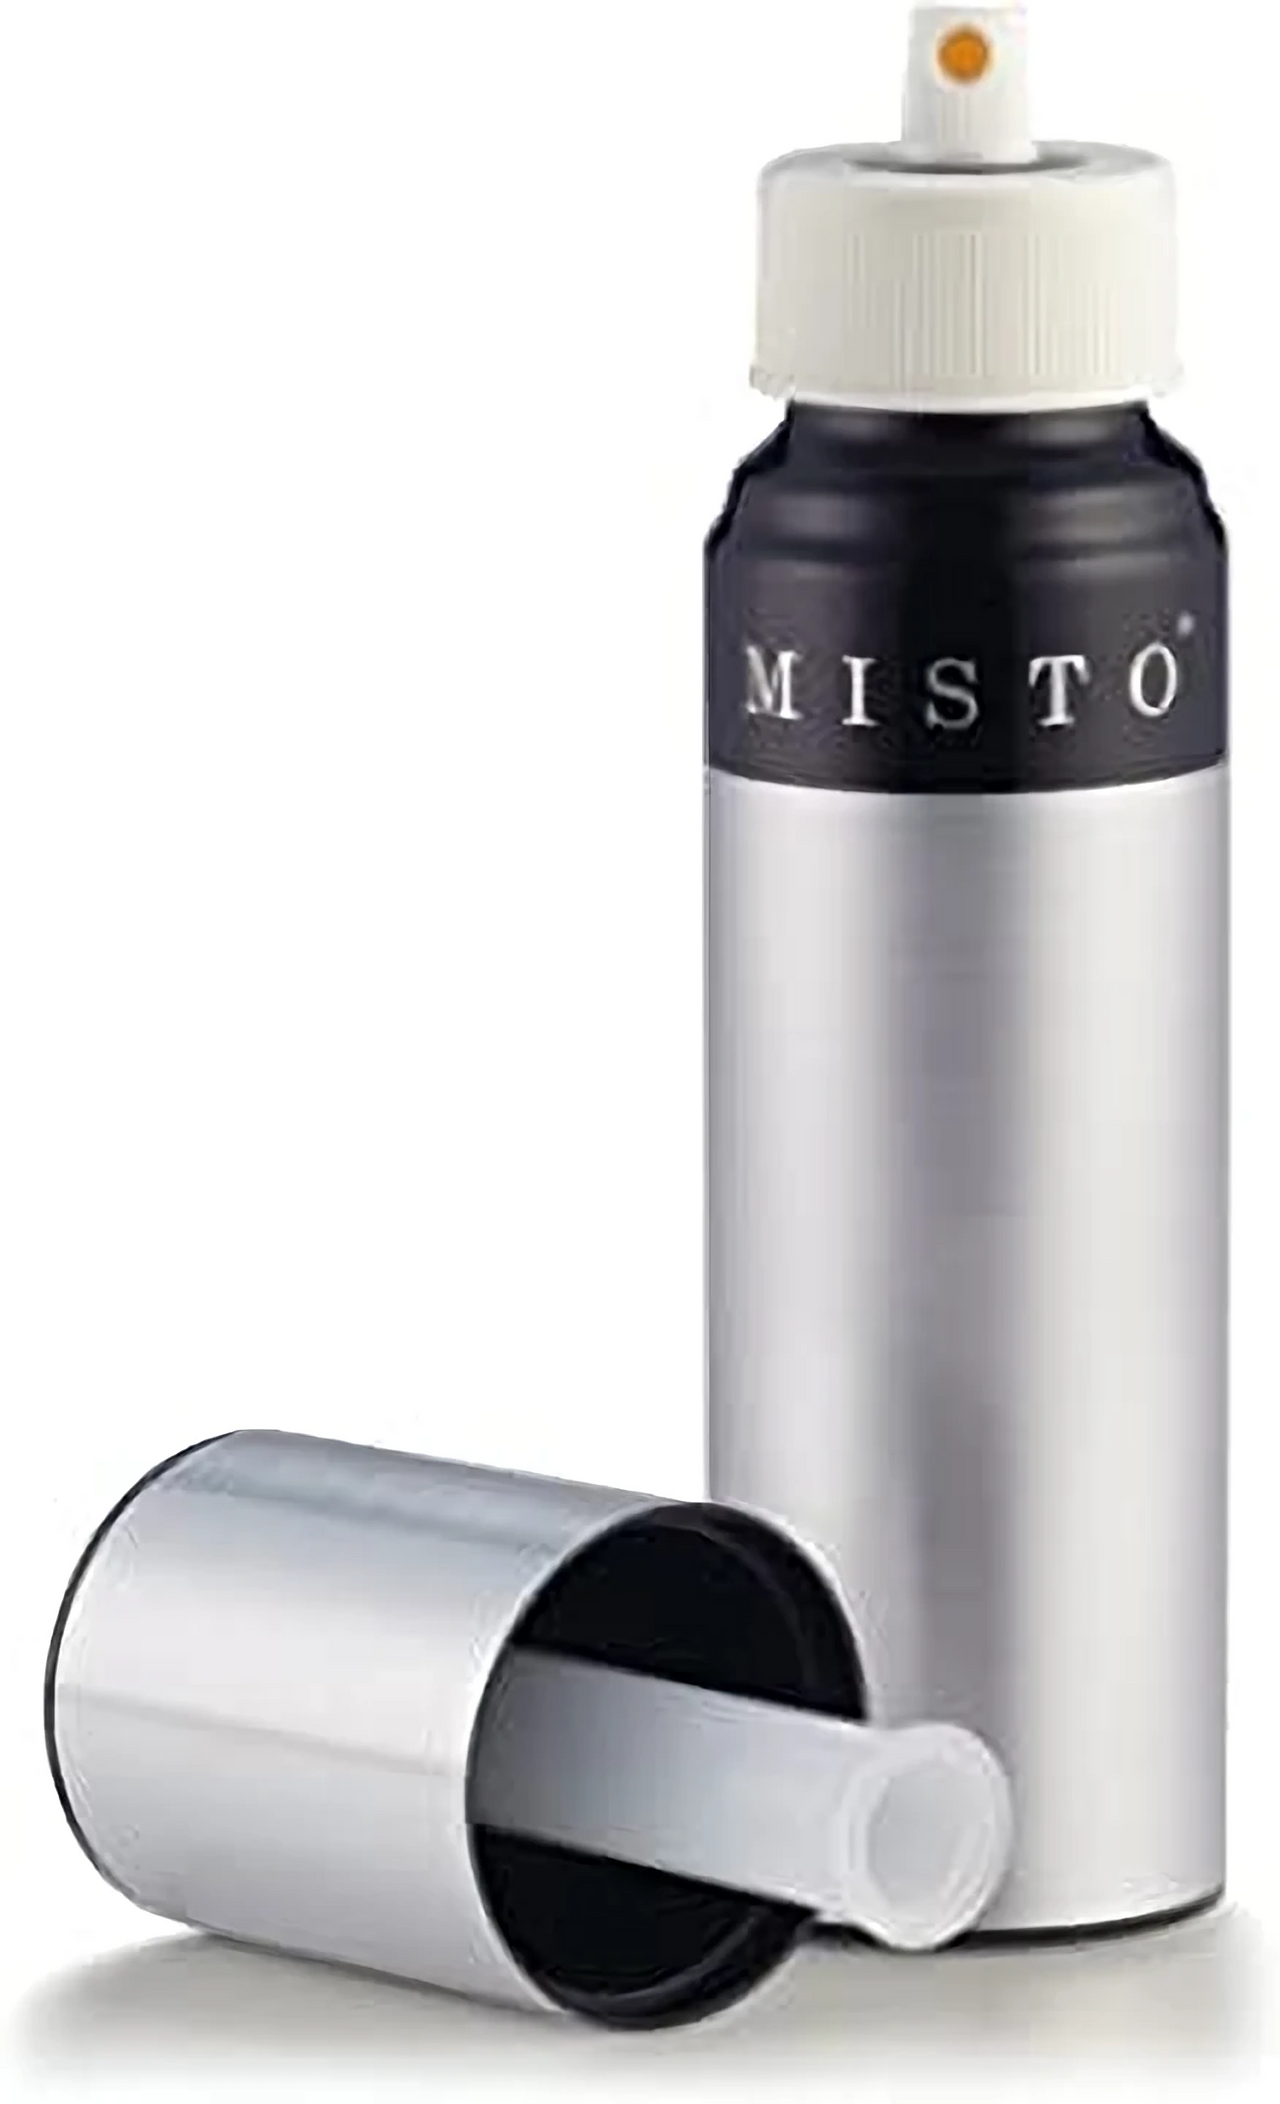 Misto oil sprayer bottle with attached straw